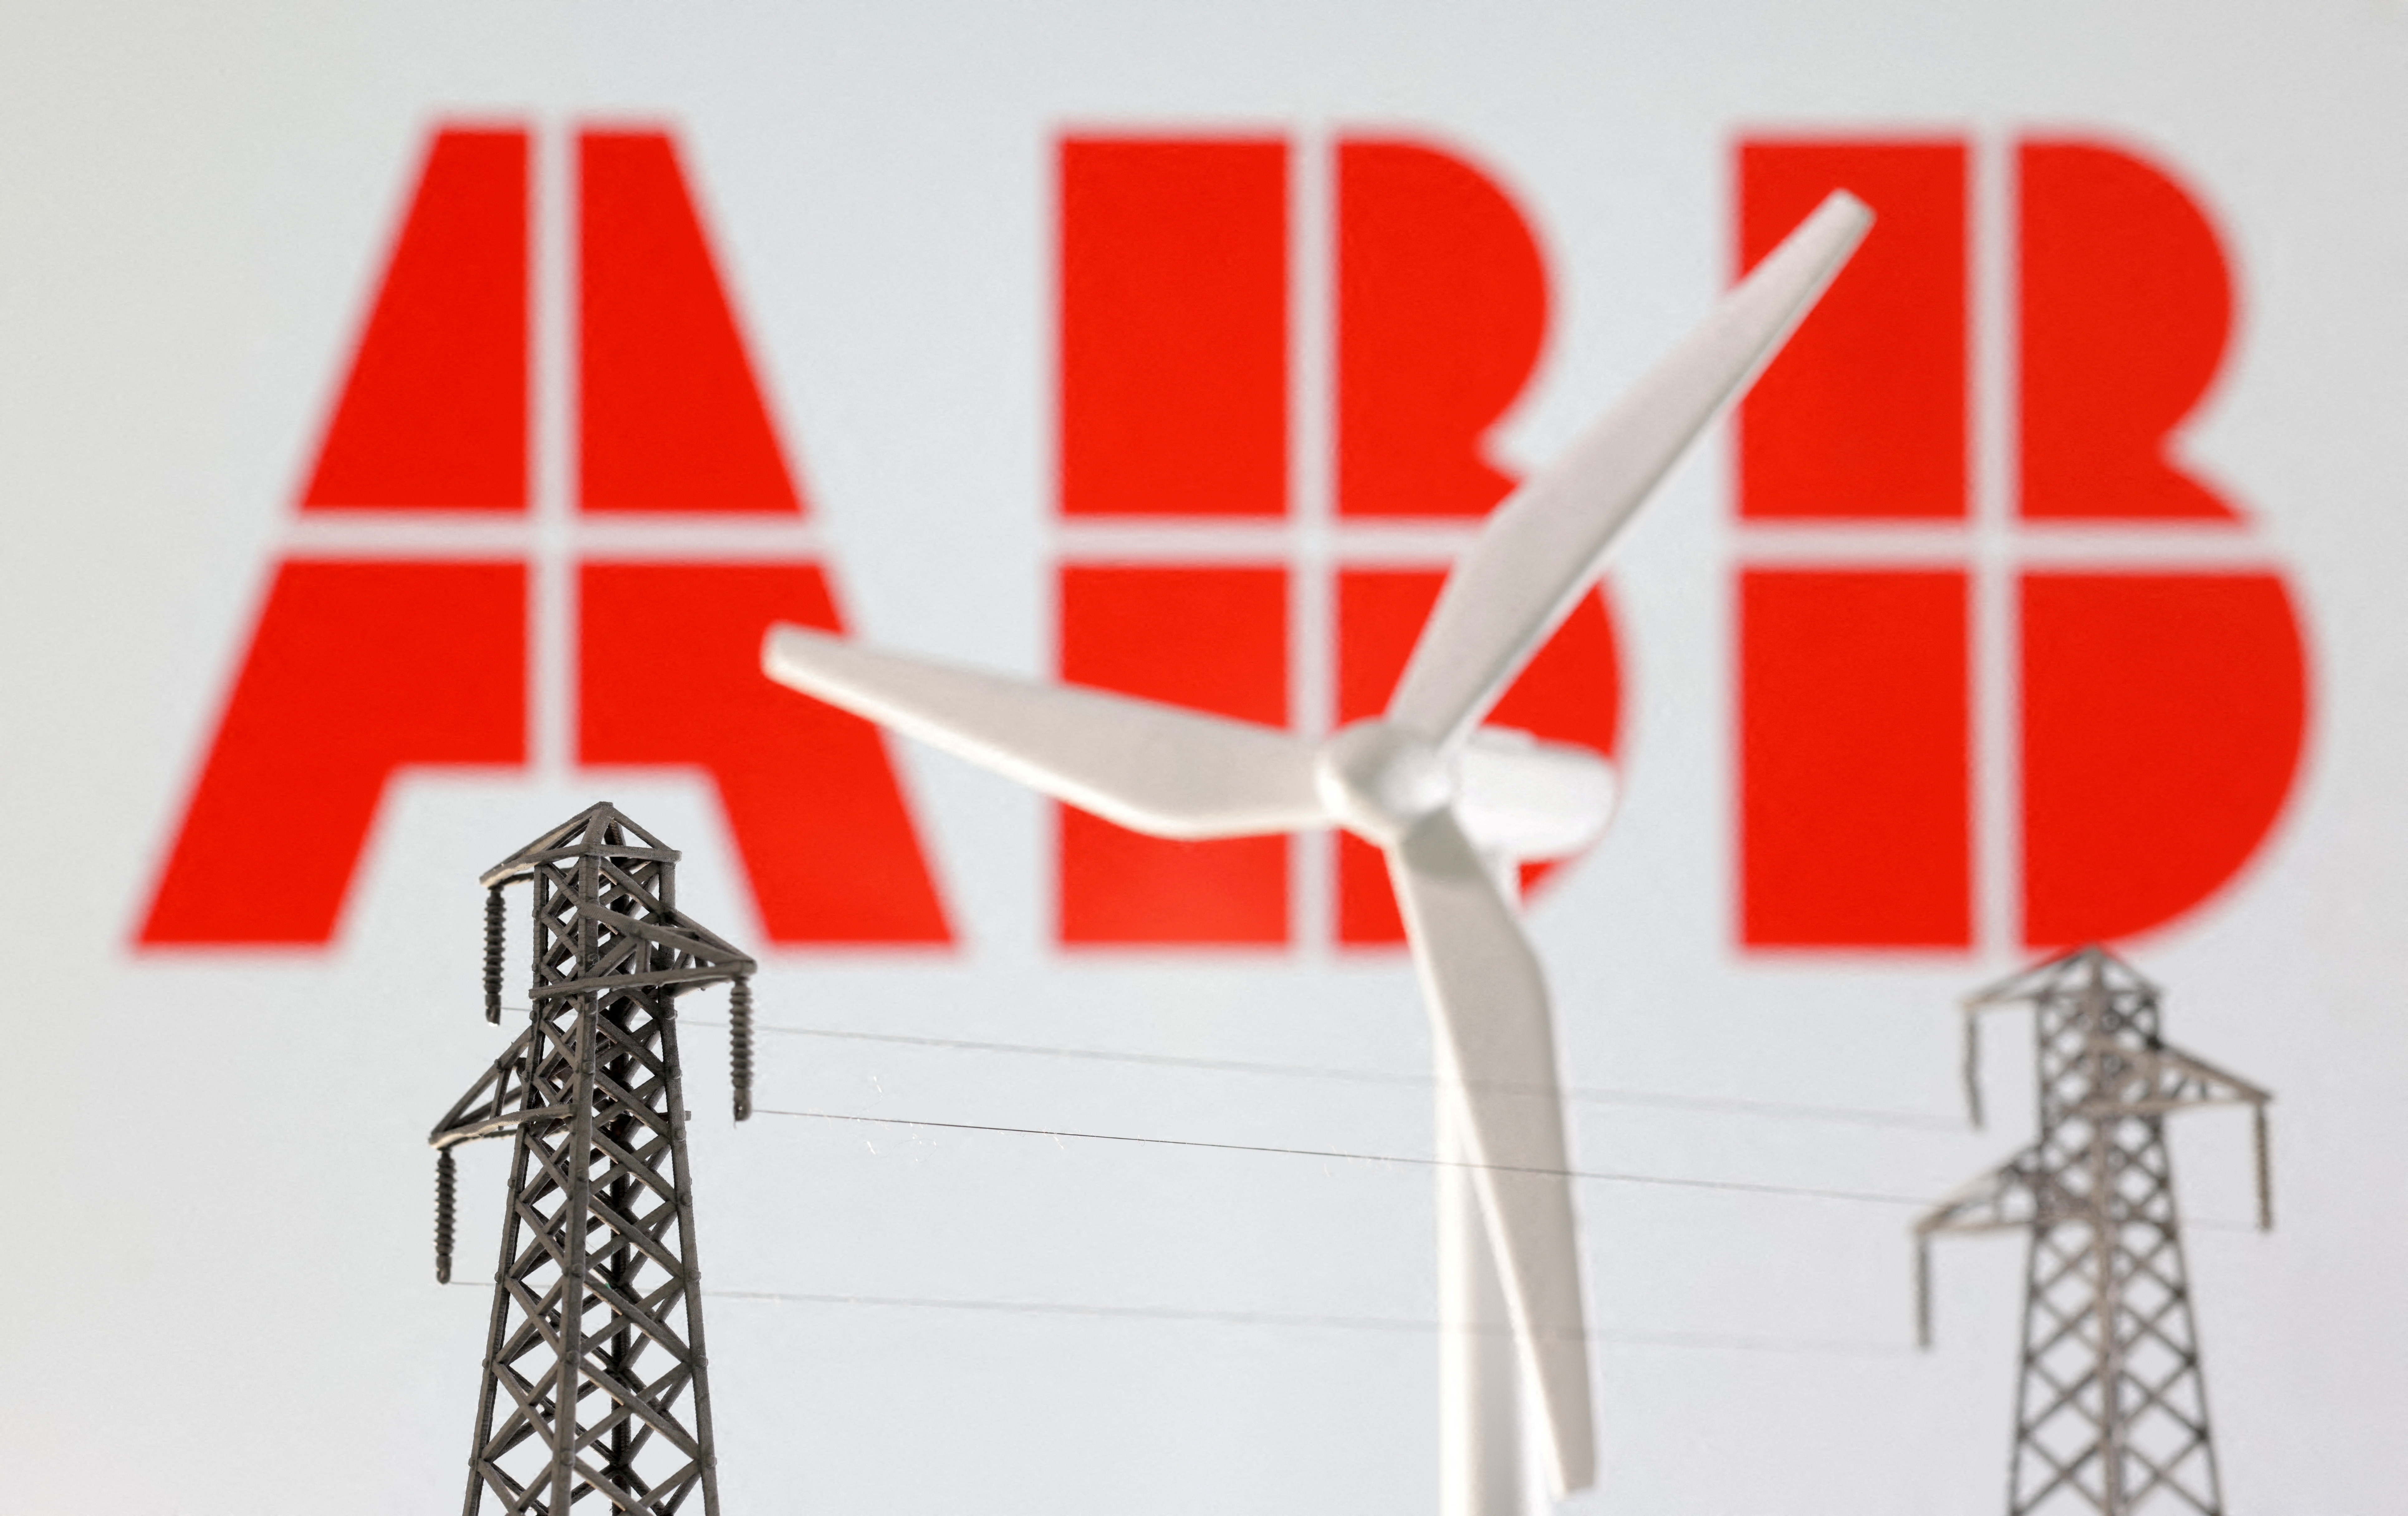 Illustration shows ABB Energy Industries logo